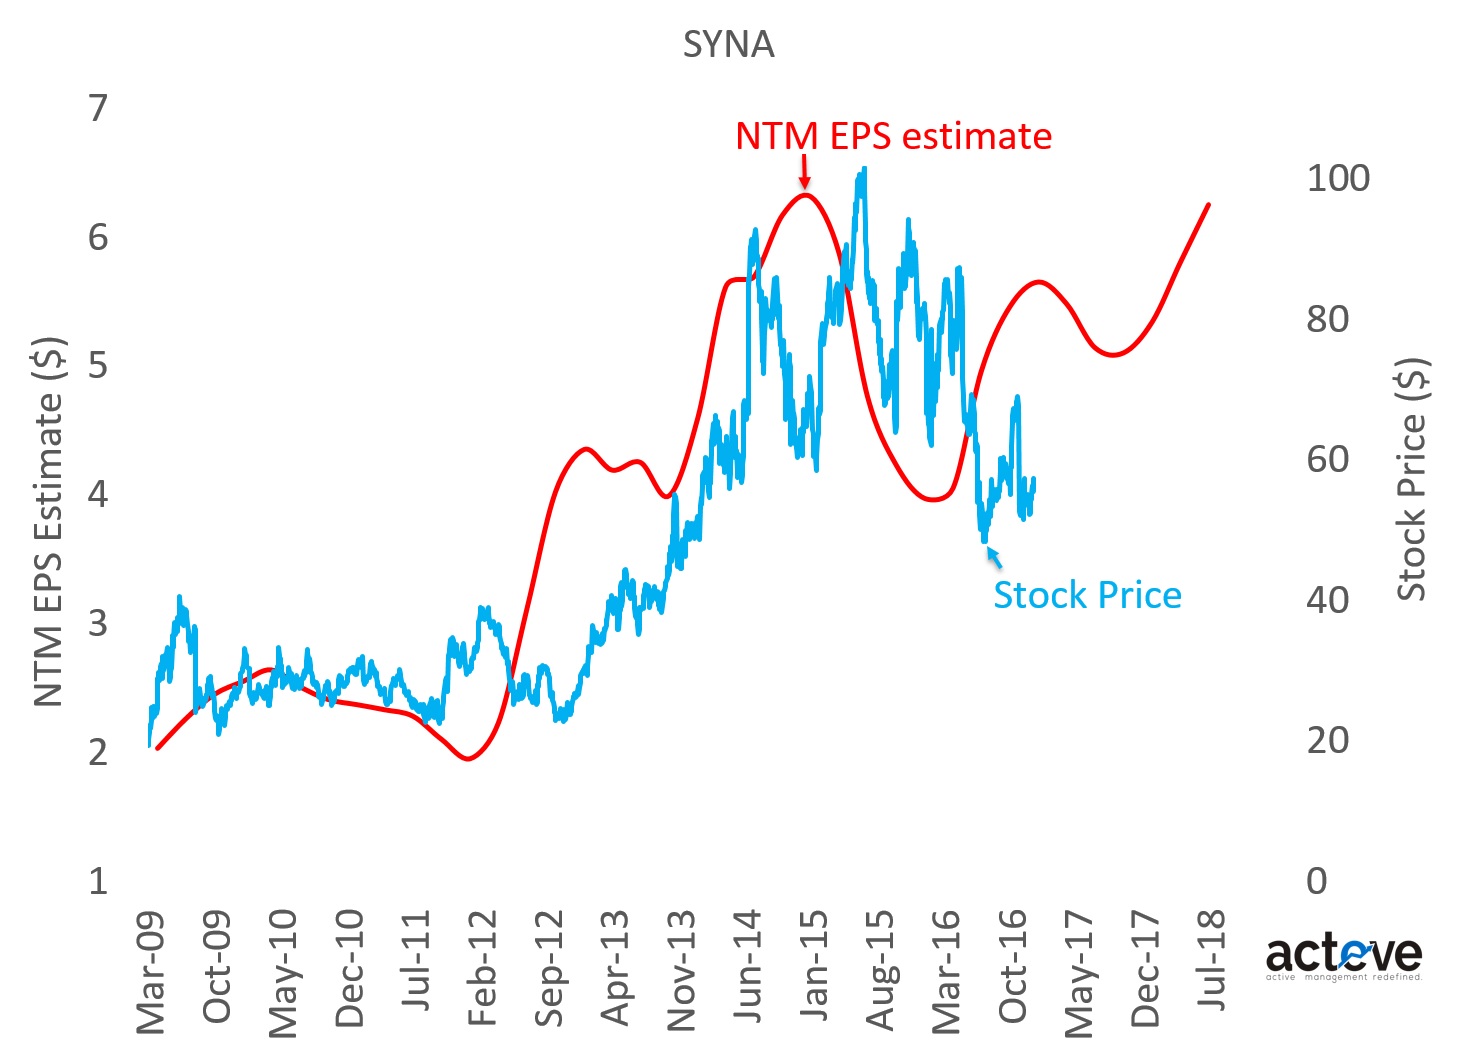 SYNA stock vs. NTM EPS